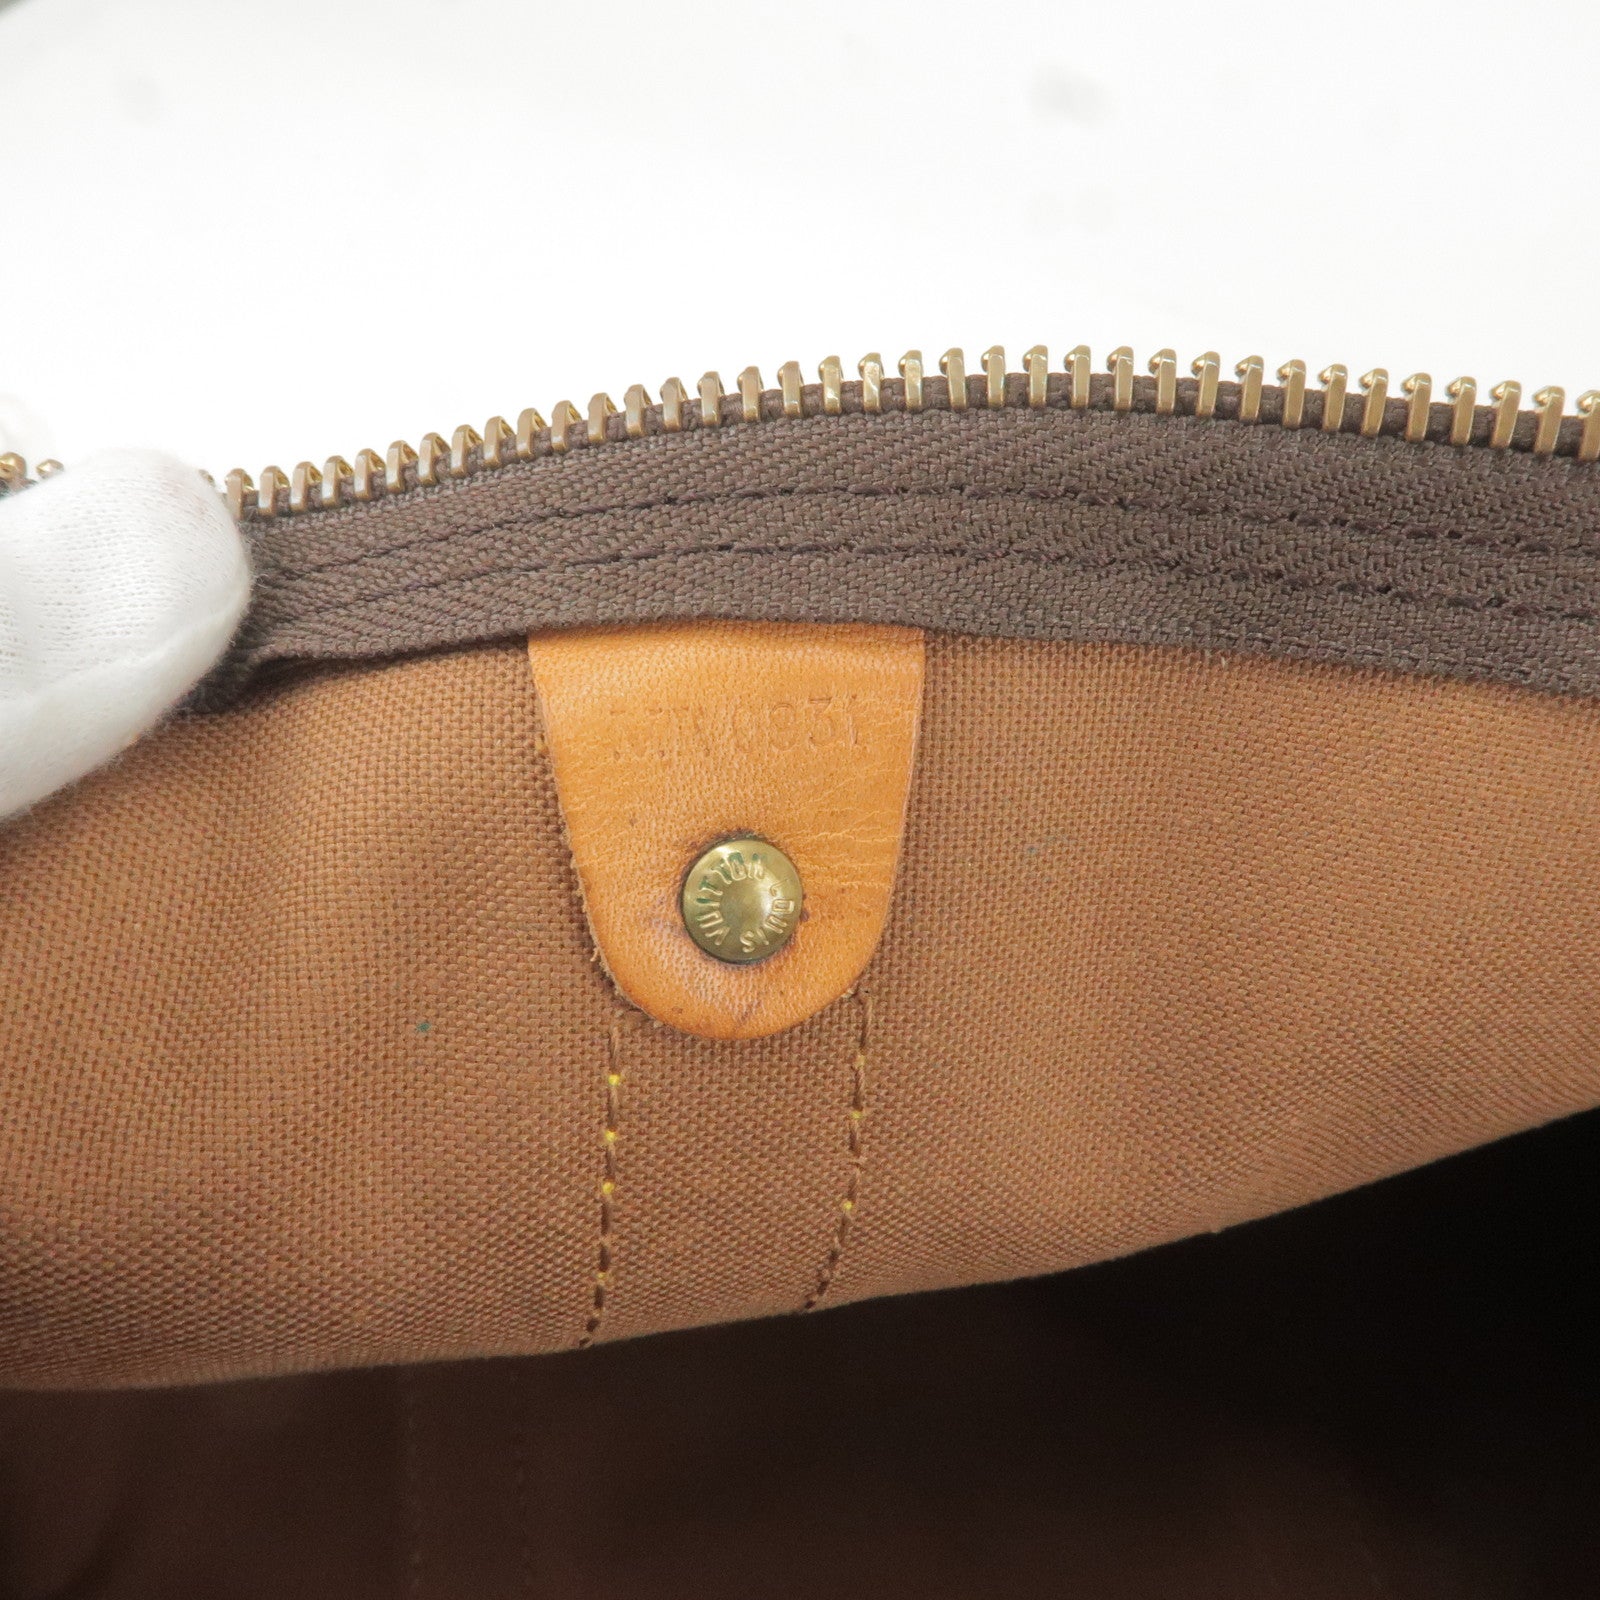 Bolso bandolera Louis Vuitton Trotteur en lona Monogram y cuero natural, Brown Louis Vuitton Monogram Keepall 60 Travel Bag